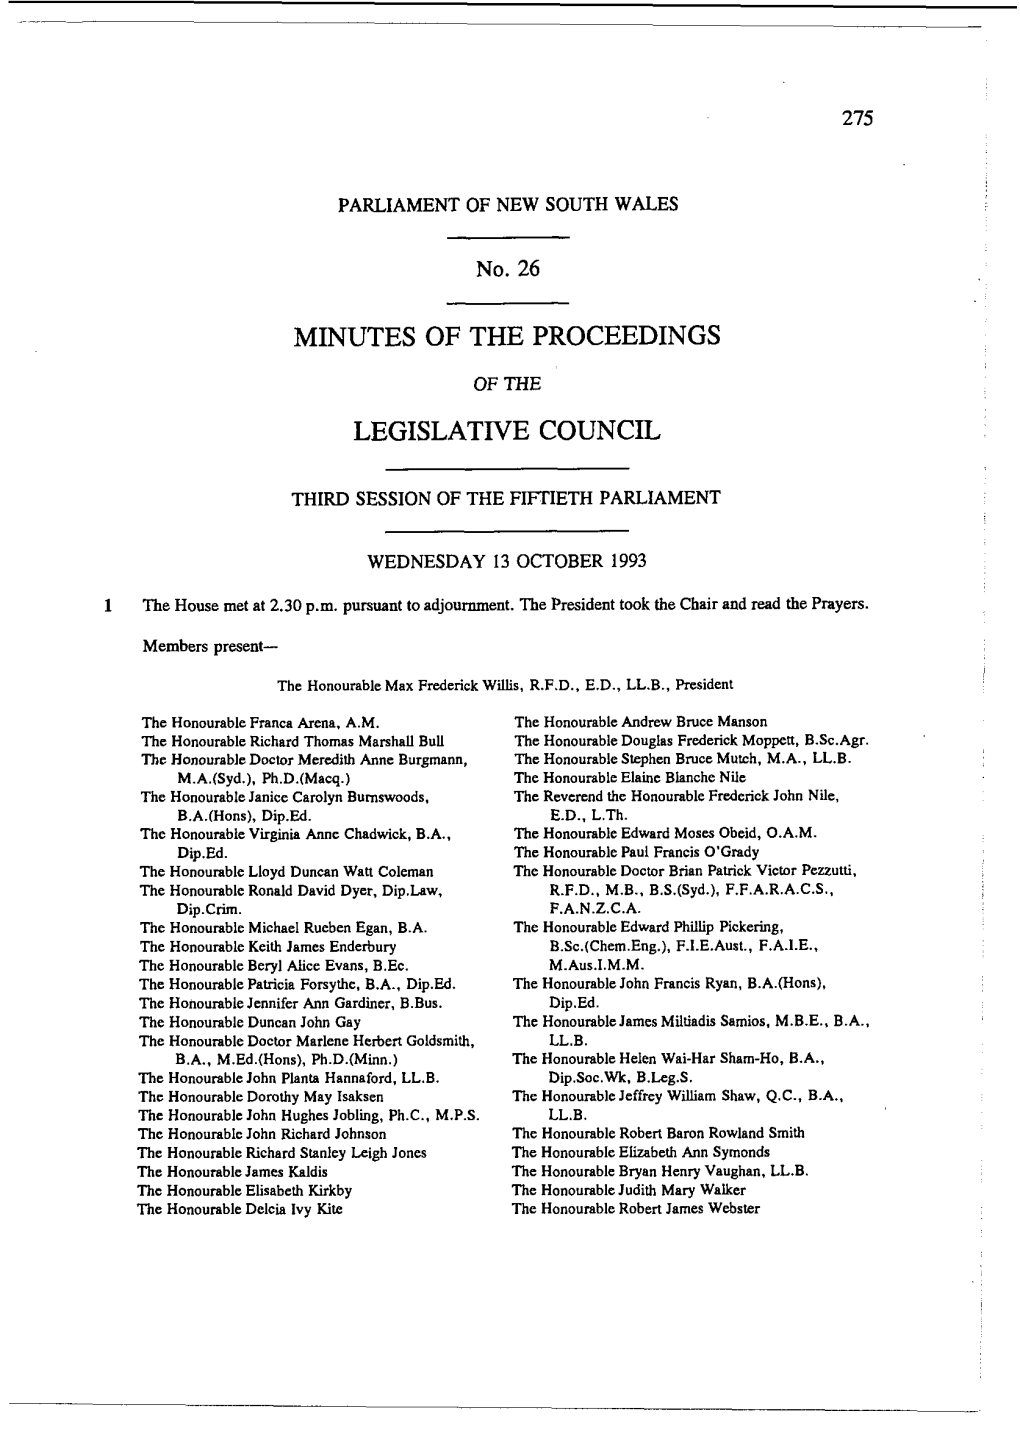 Minutes of the Proceedings Legislative